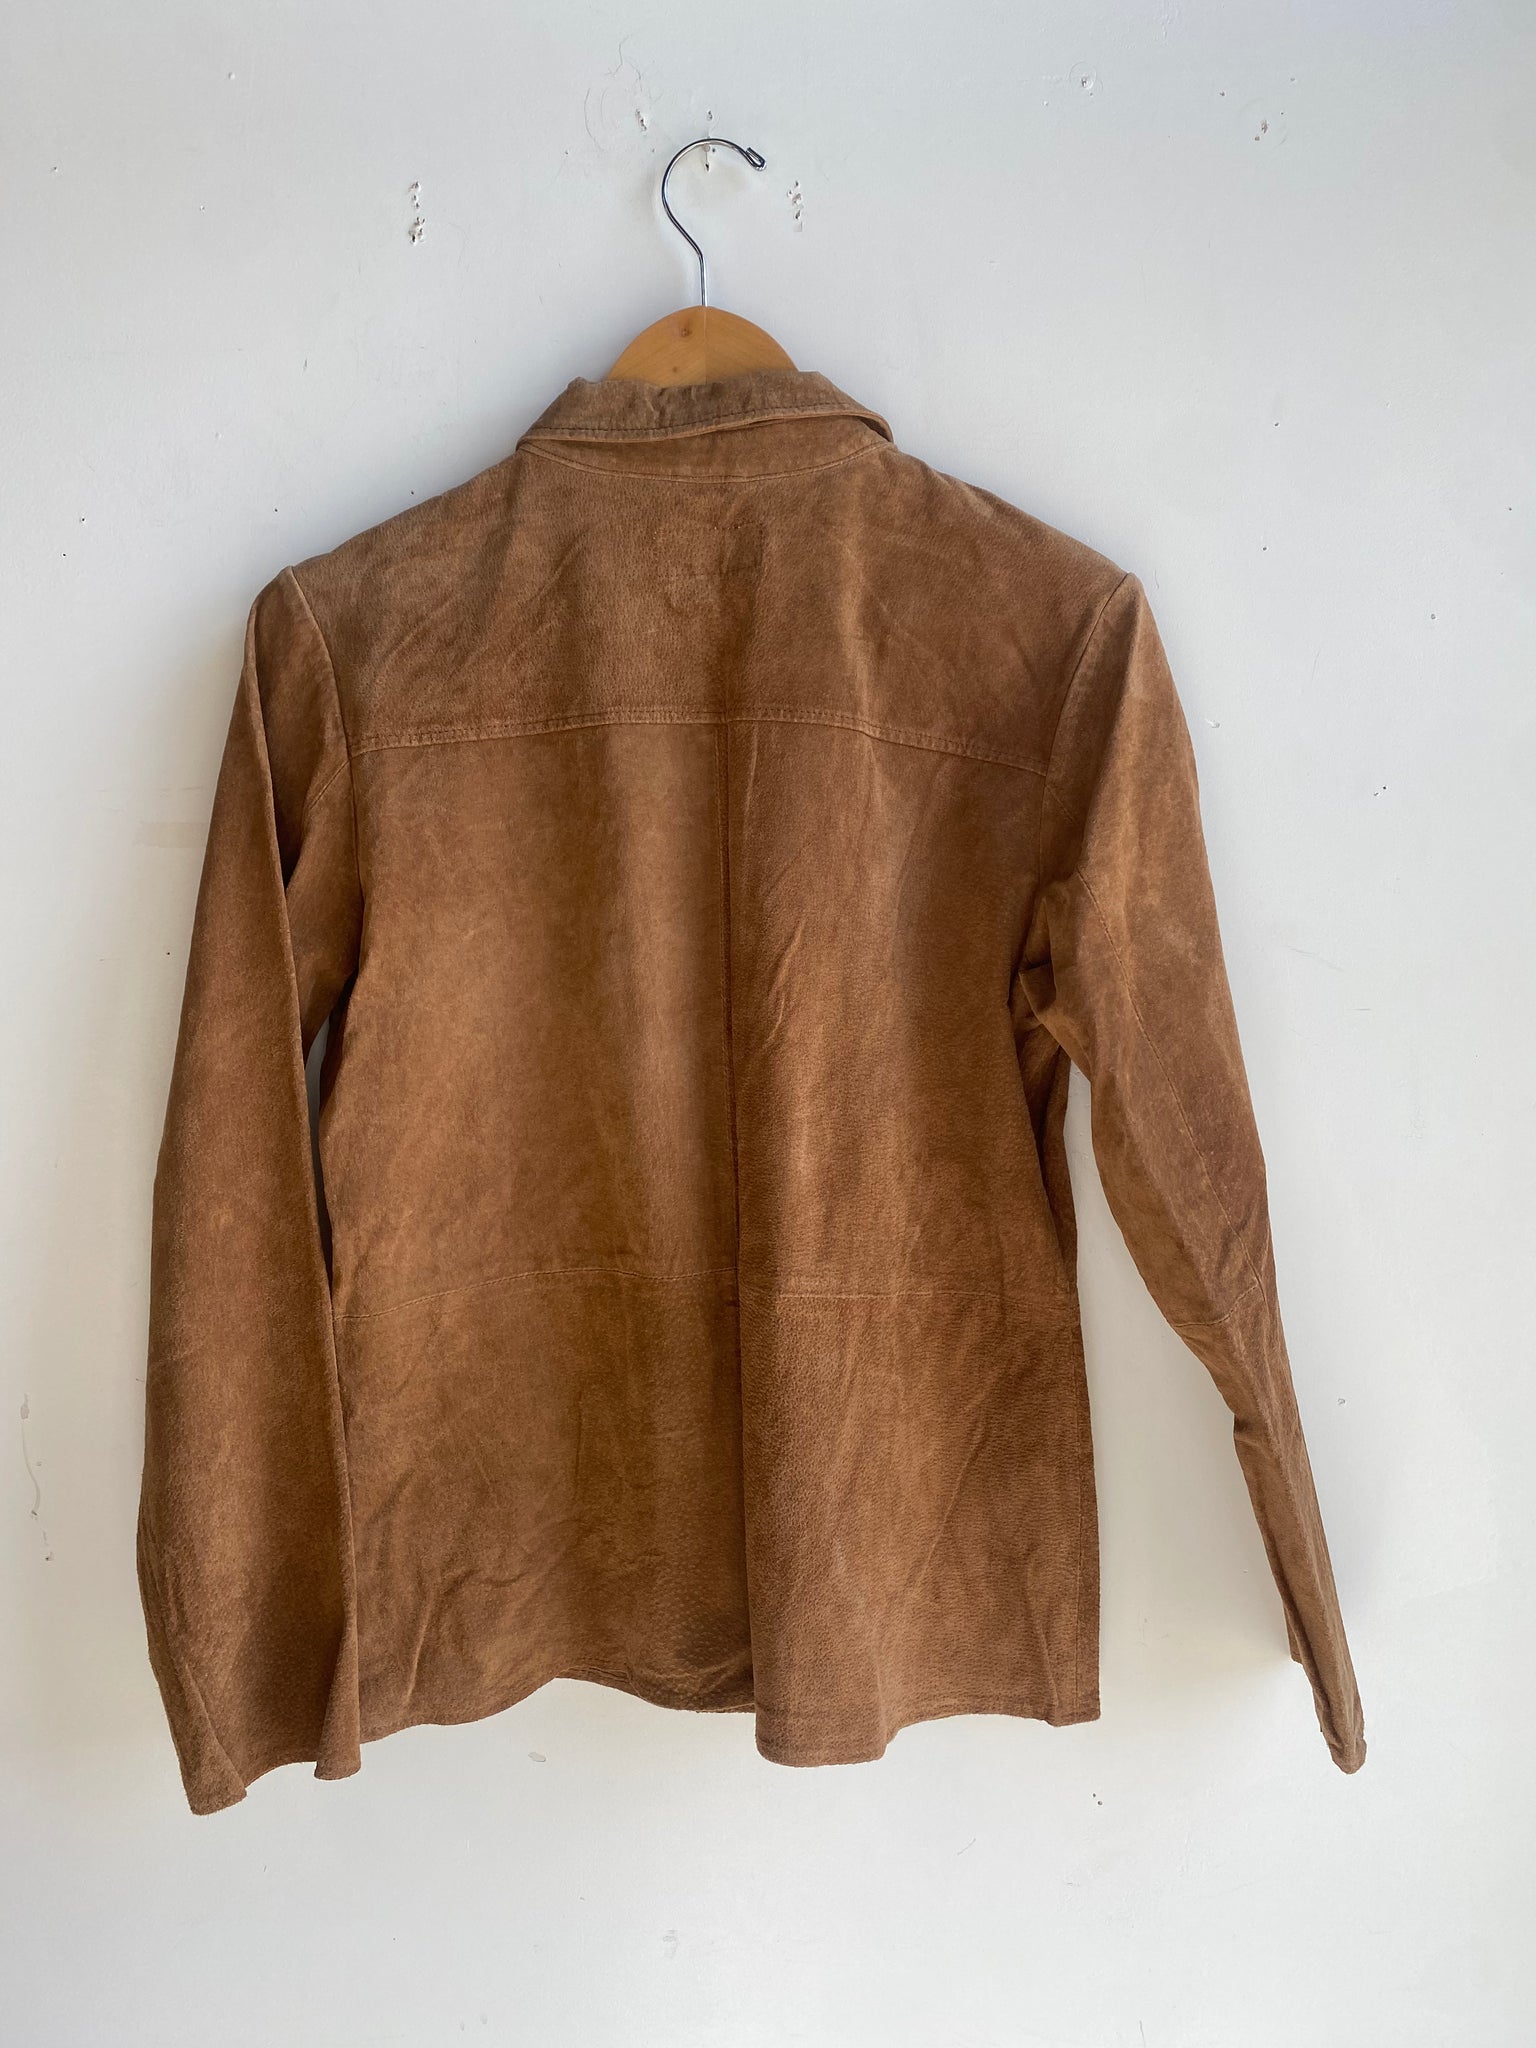 Y2K "Bagatelle" Suede Leather Jacket